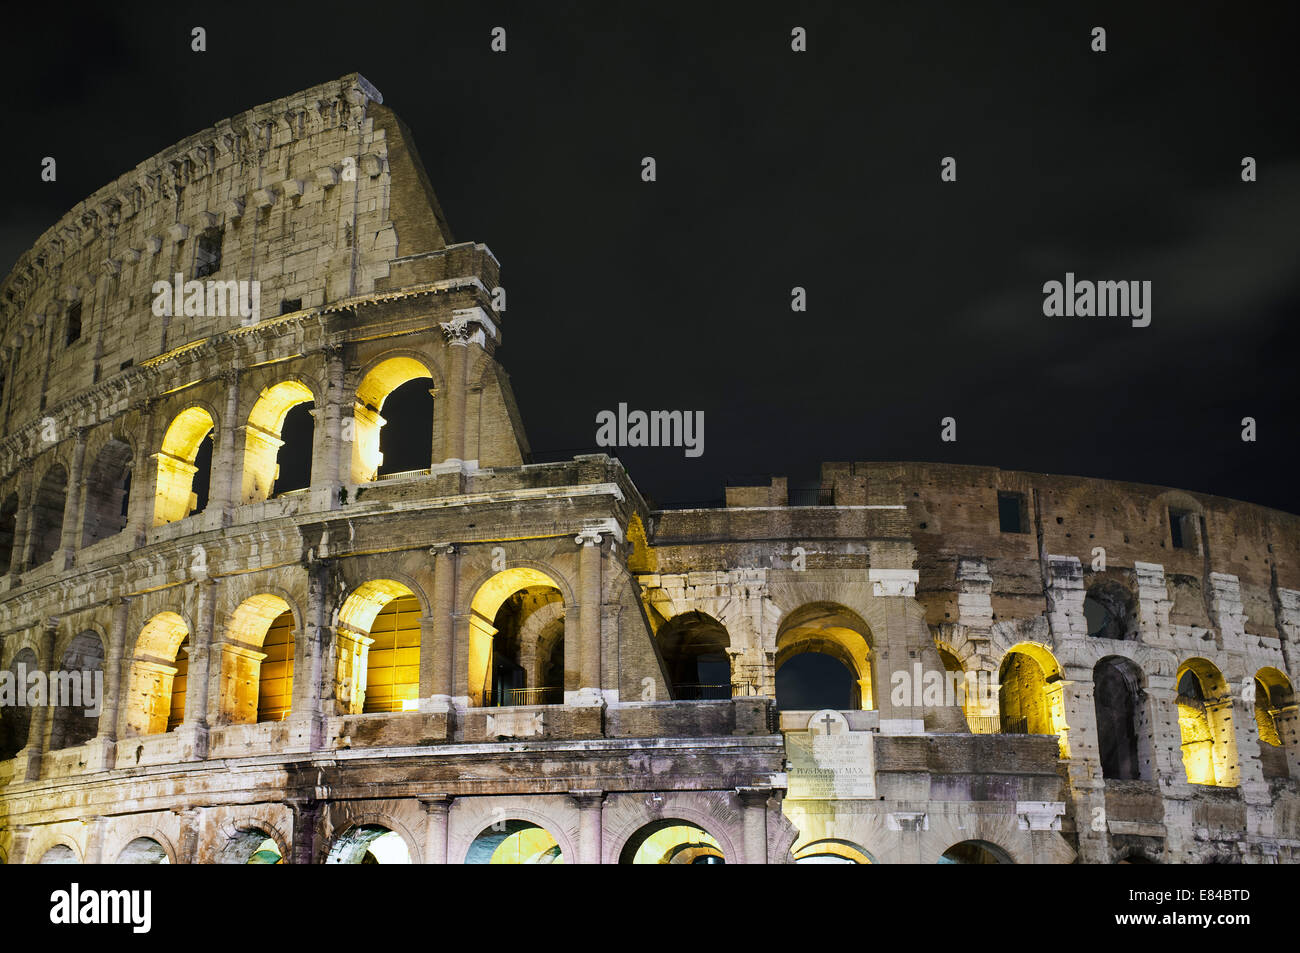 El coliseo por la noche. Roma, Italia. Foto de stock